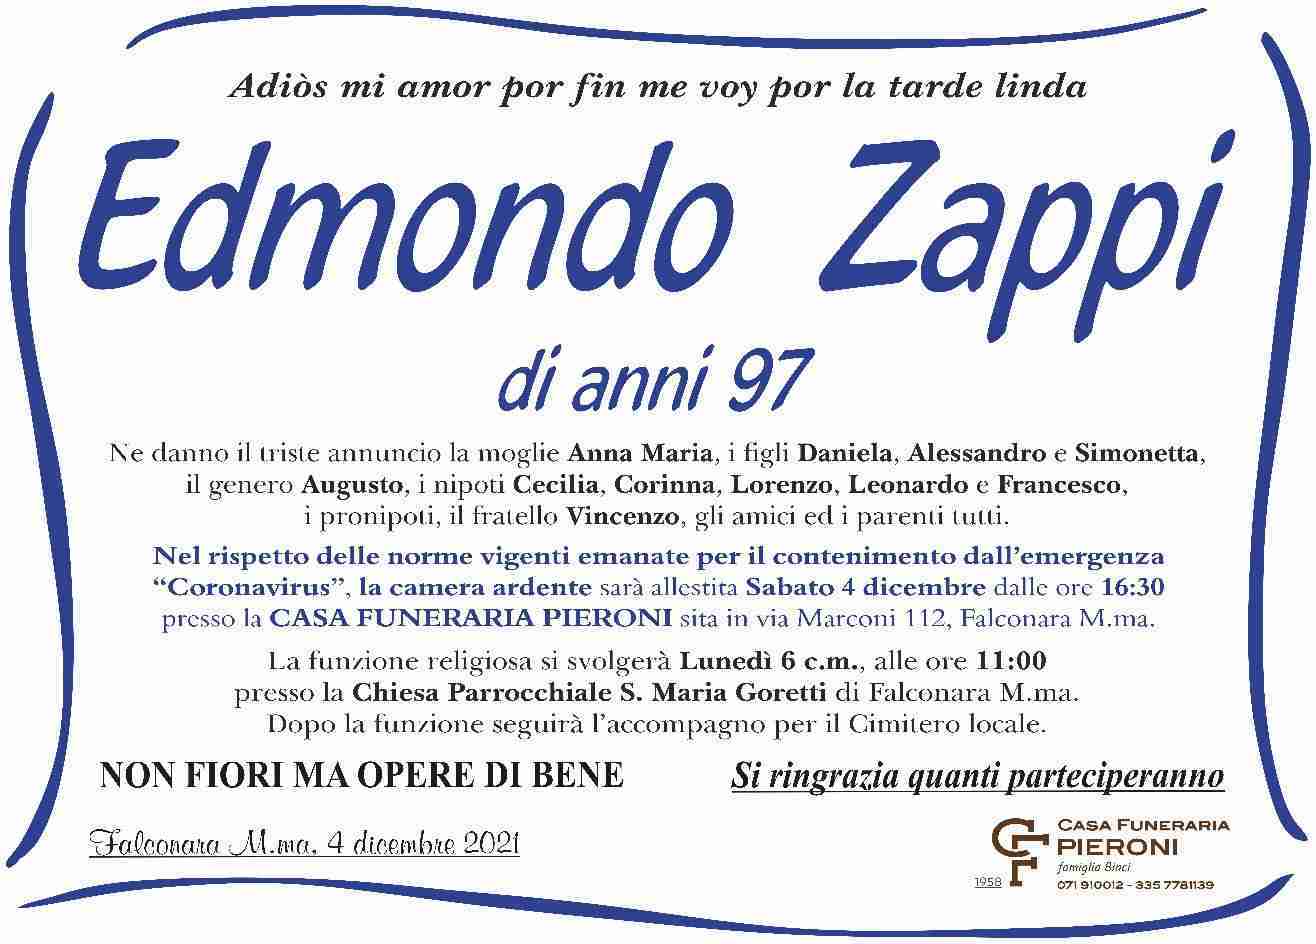 Edmondo Zappi